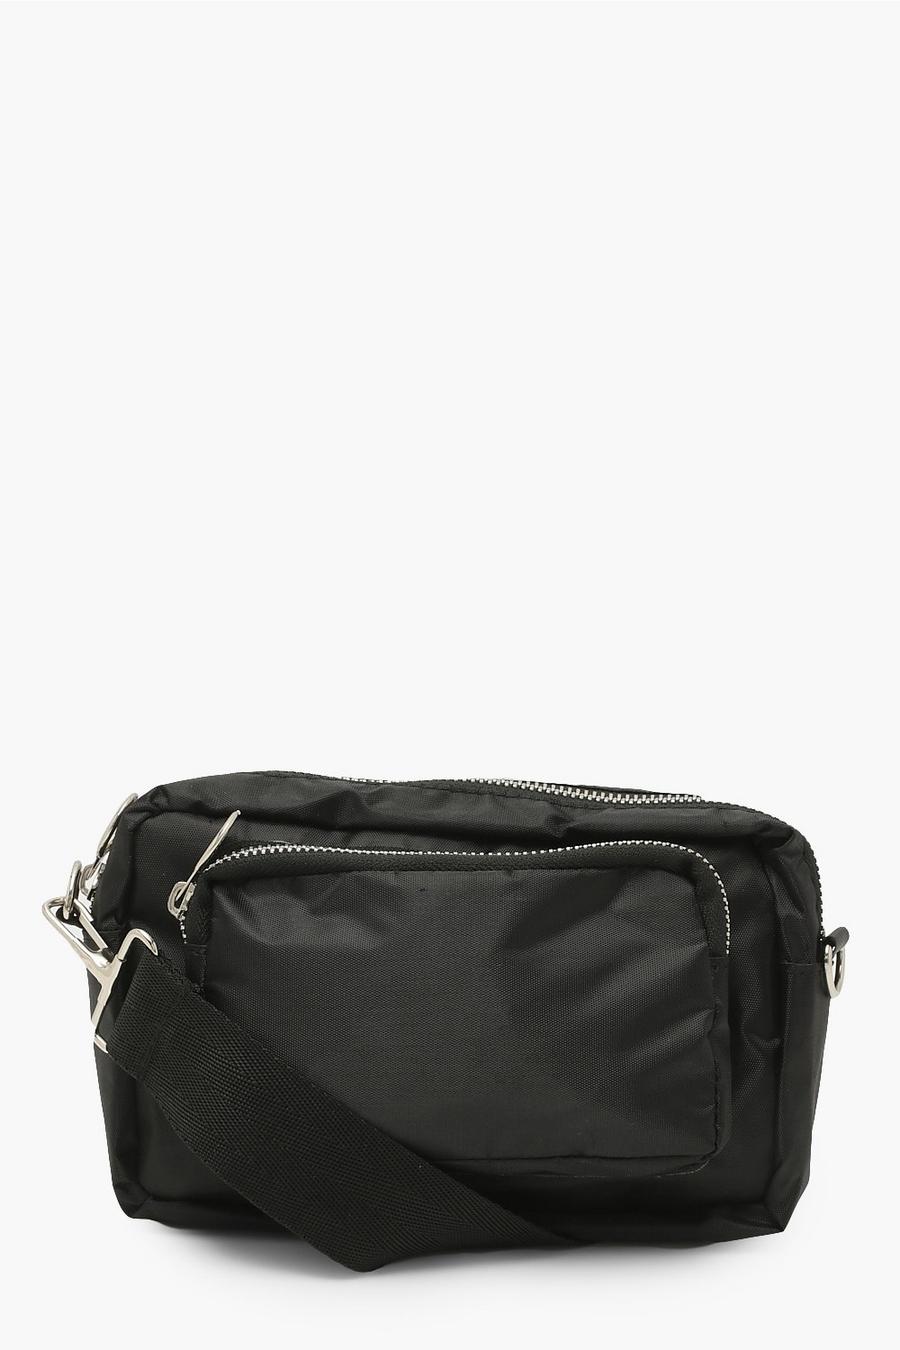 Black Nylon Zip Detail Cross Body Bag image number 1